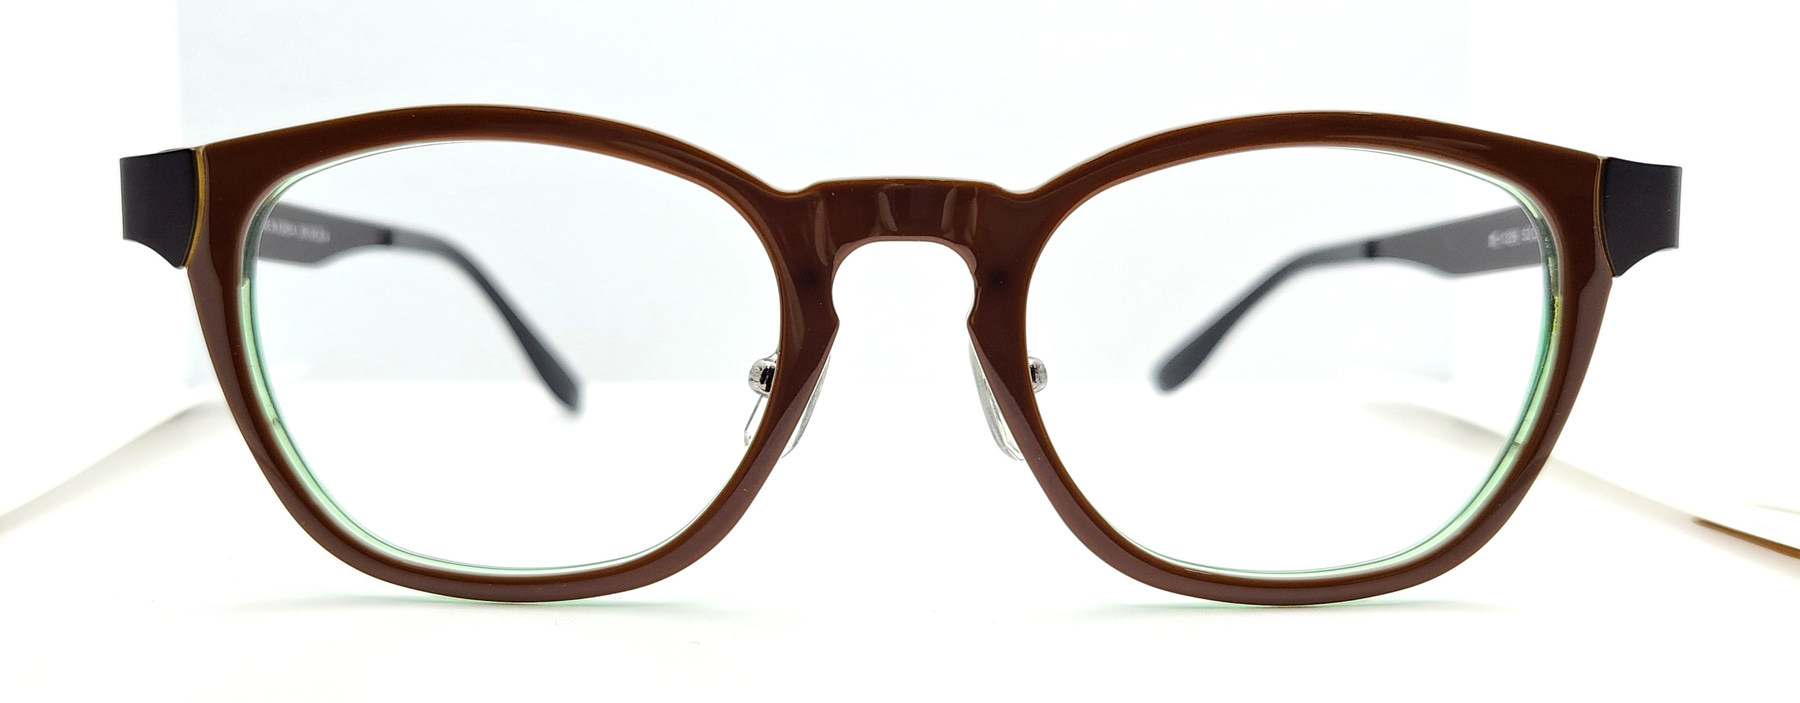 MINIHOUSE M-1226, Korean glasses, sunglasses, eyeglasses, glasses